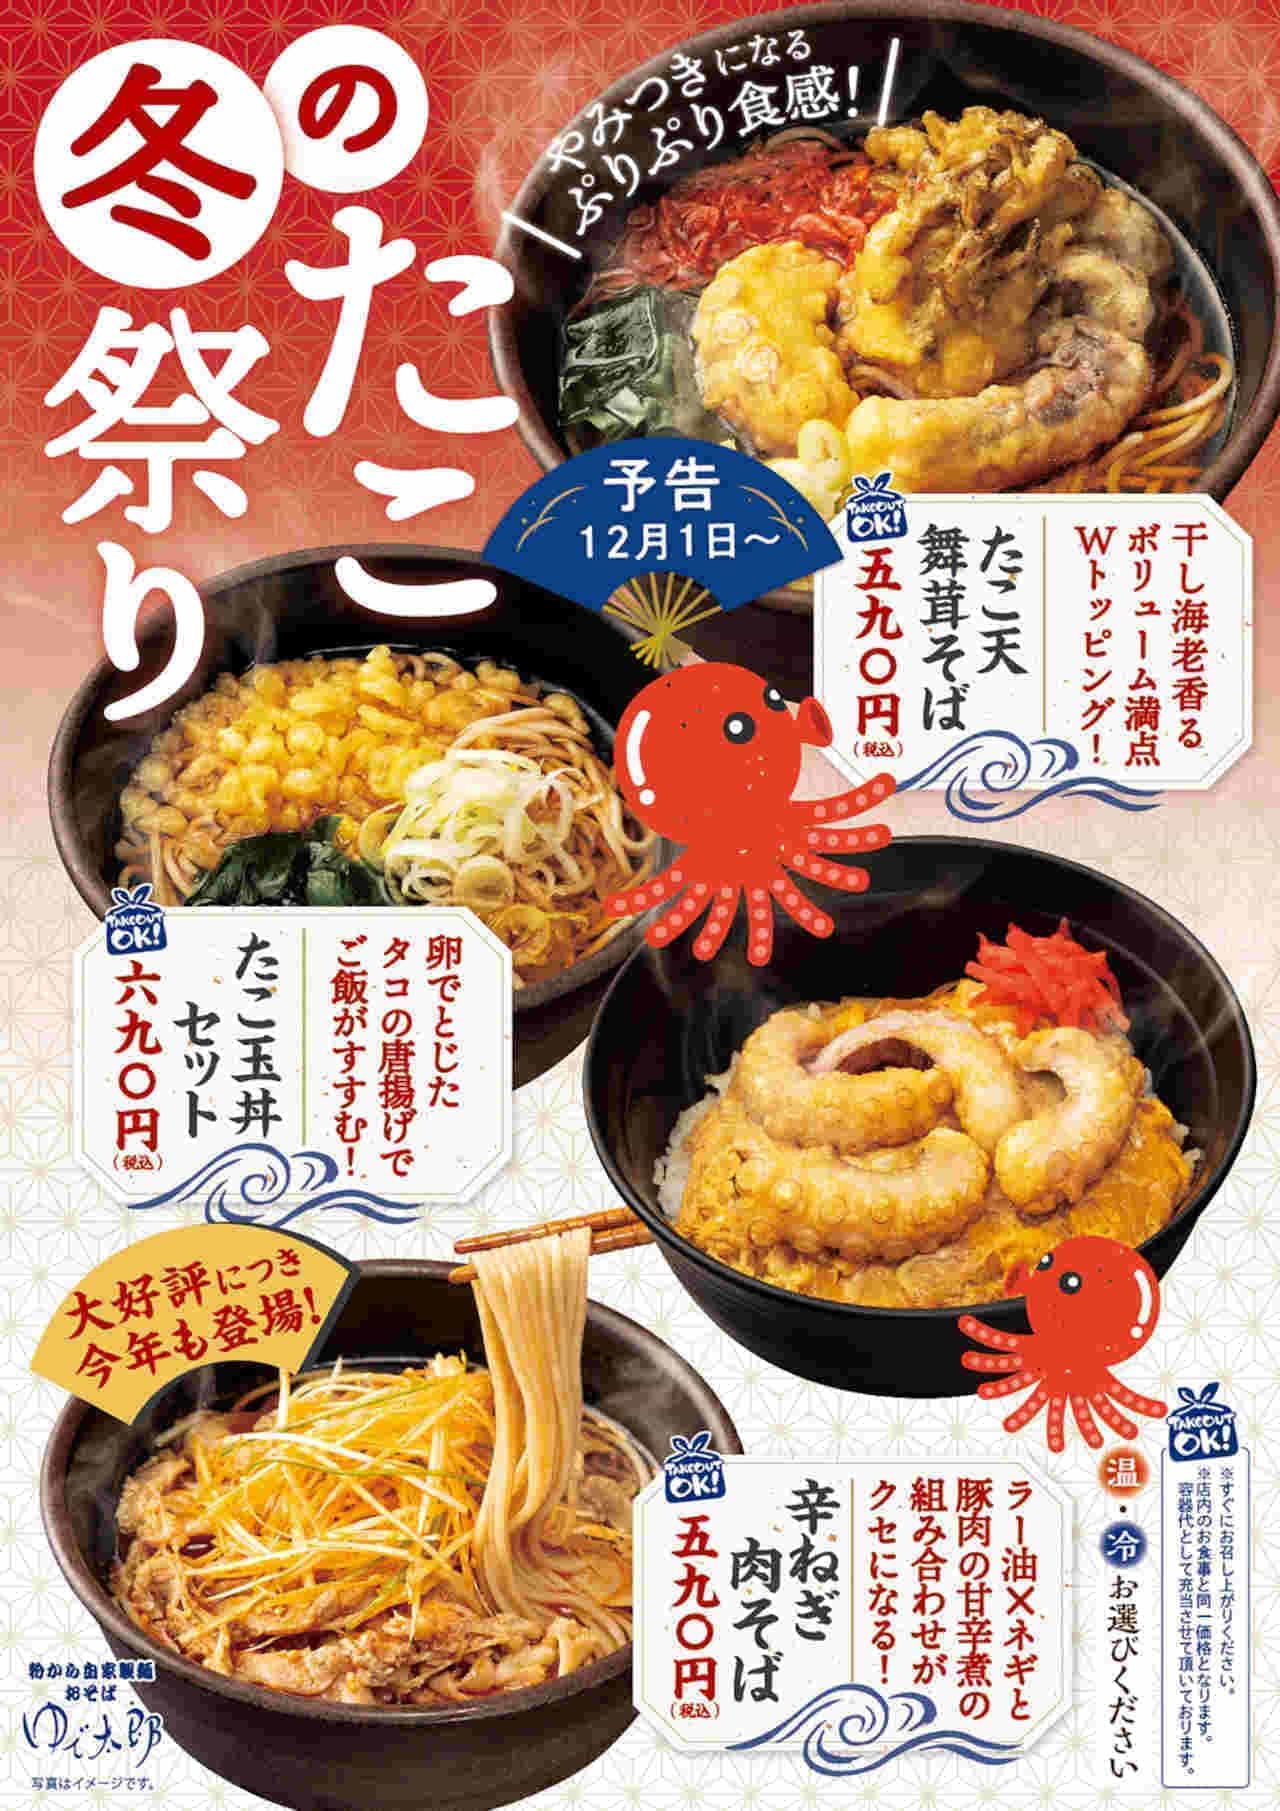 Boiled Taro "Octopus Tenmai Mushroom Soba" "Octopus Bowl Set" etc. "Winter Octopus Festival"